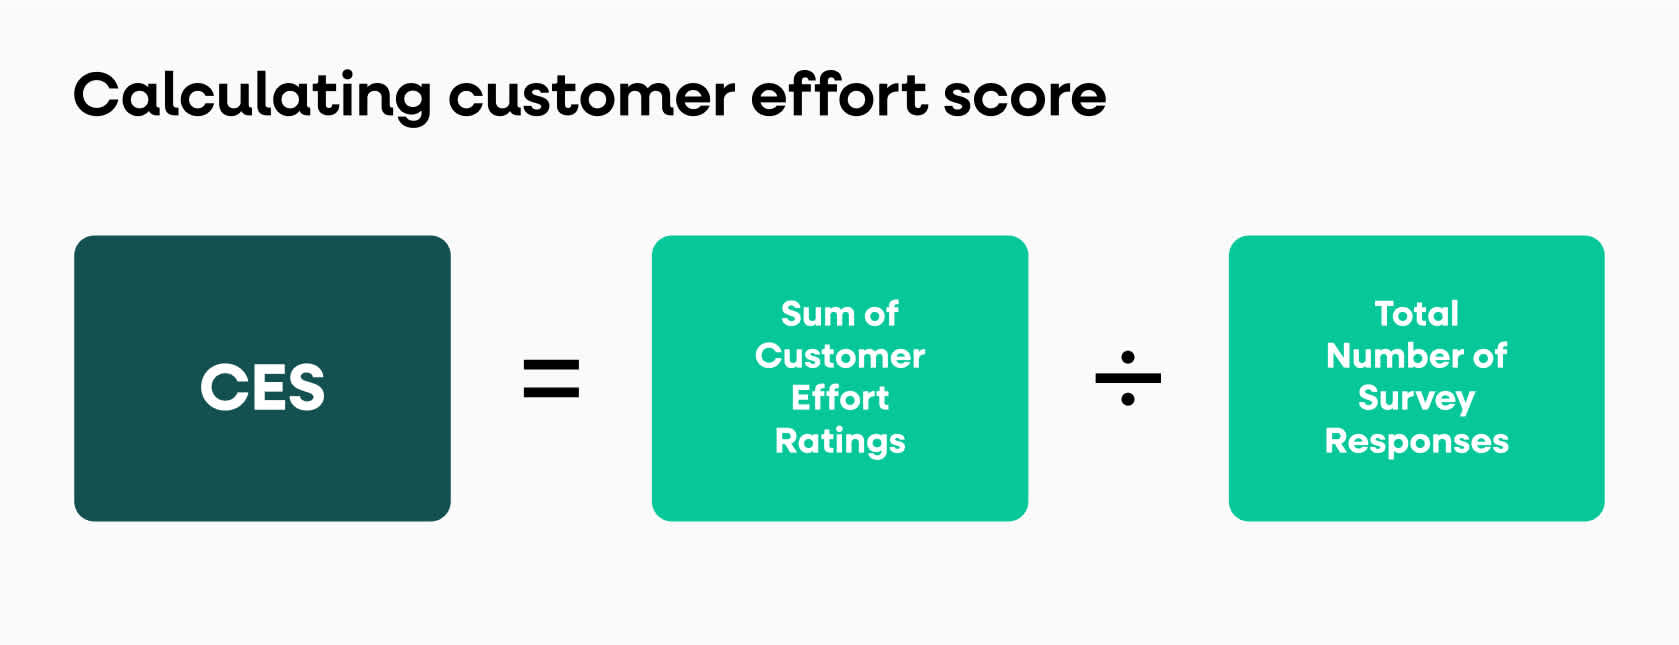 customer effort score calculation graphic